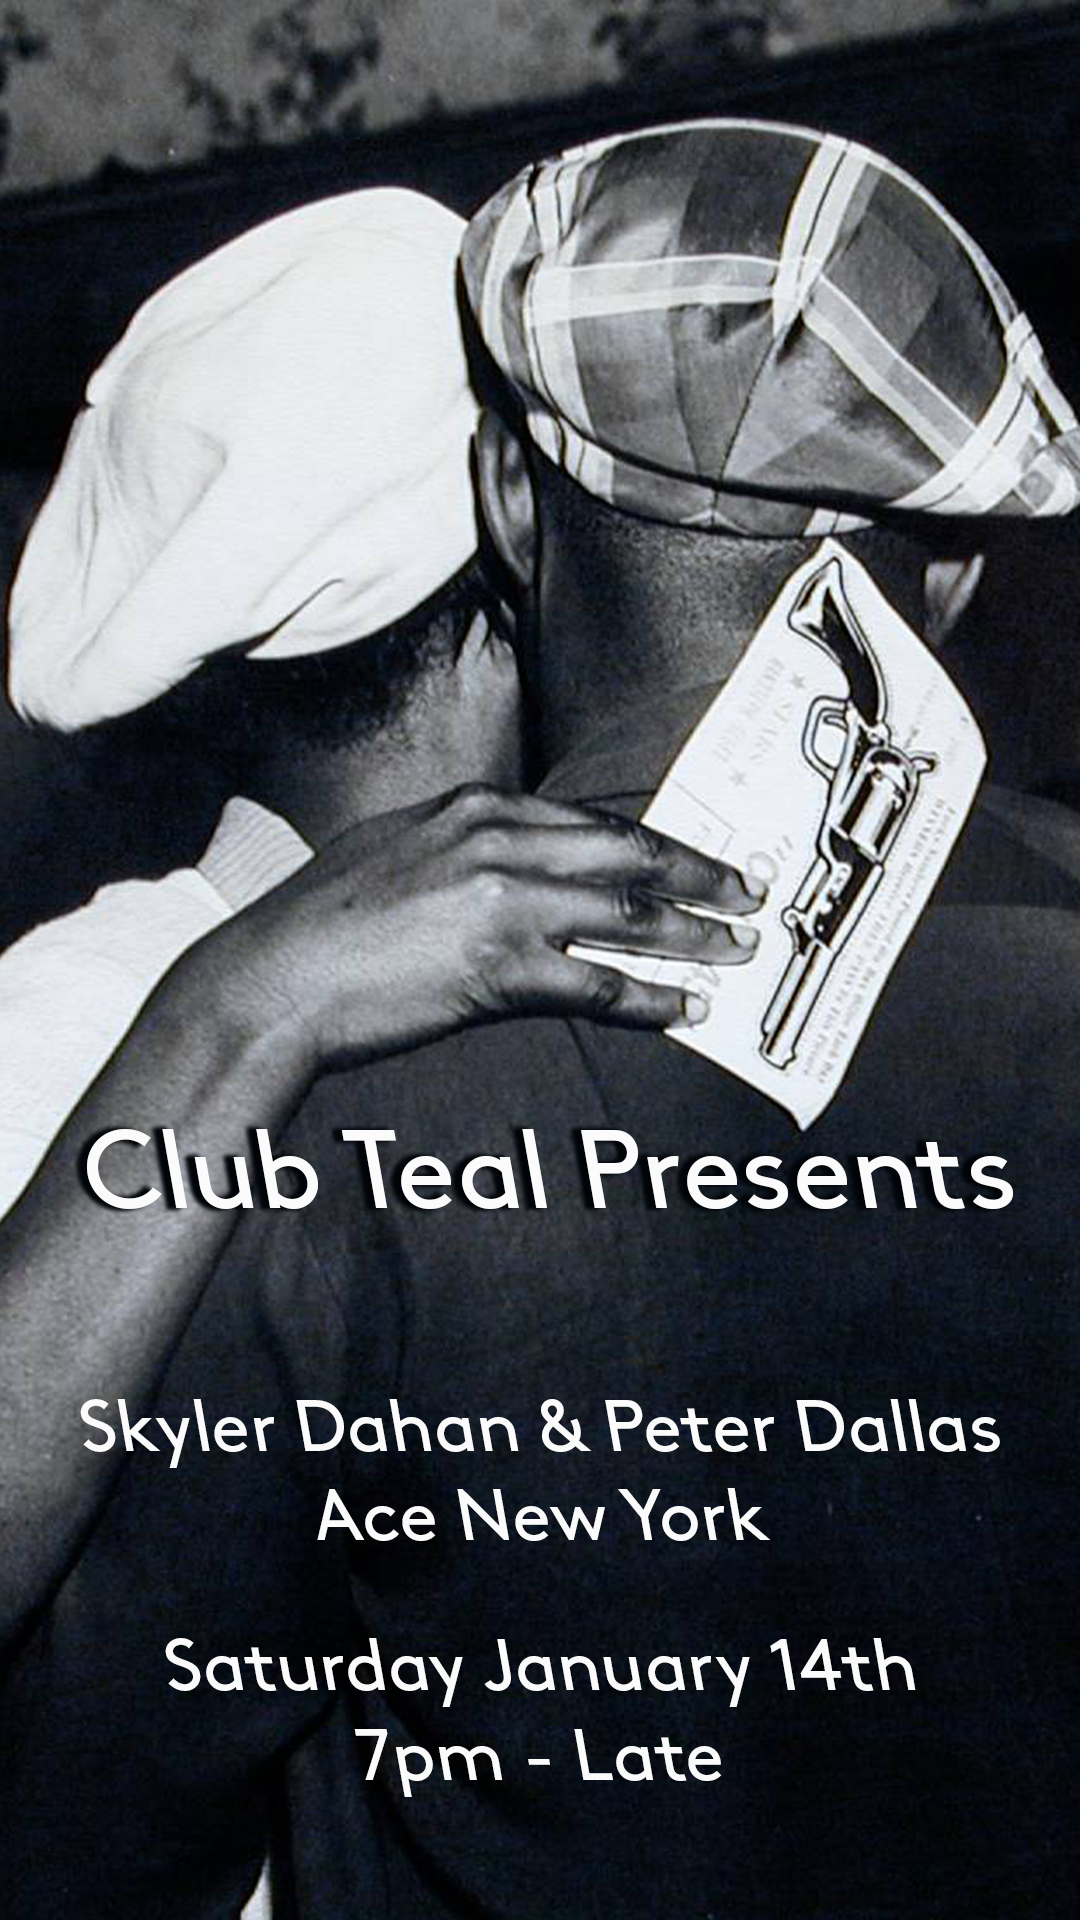 Club Teal Presents – a night with Skyler Dahan promo